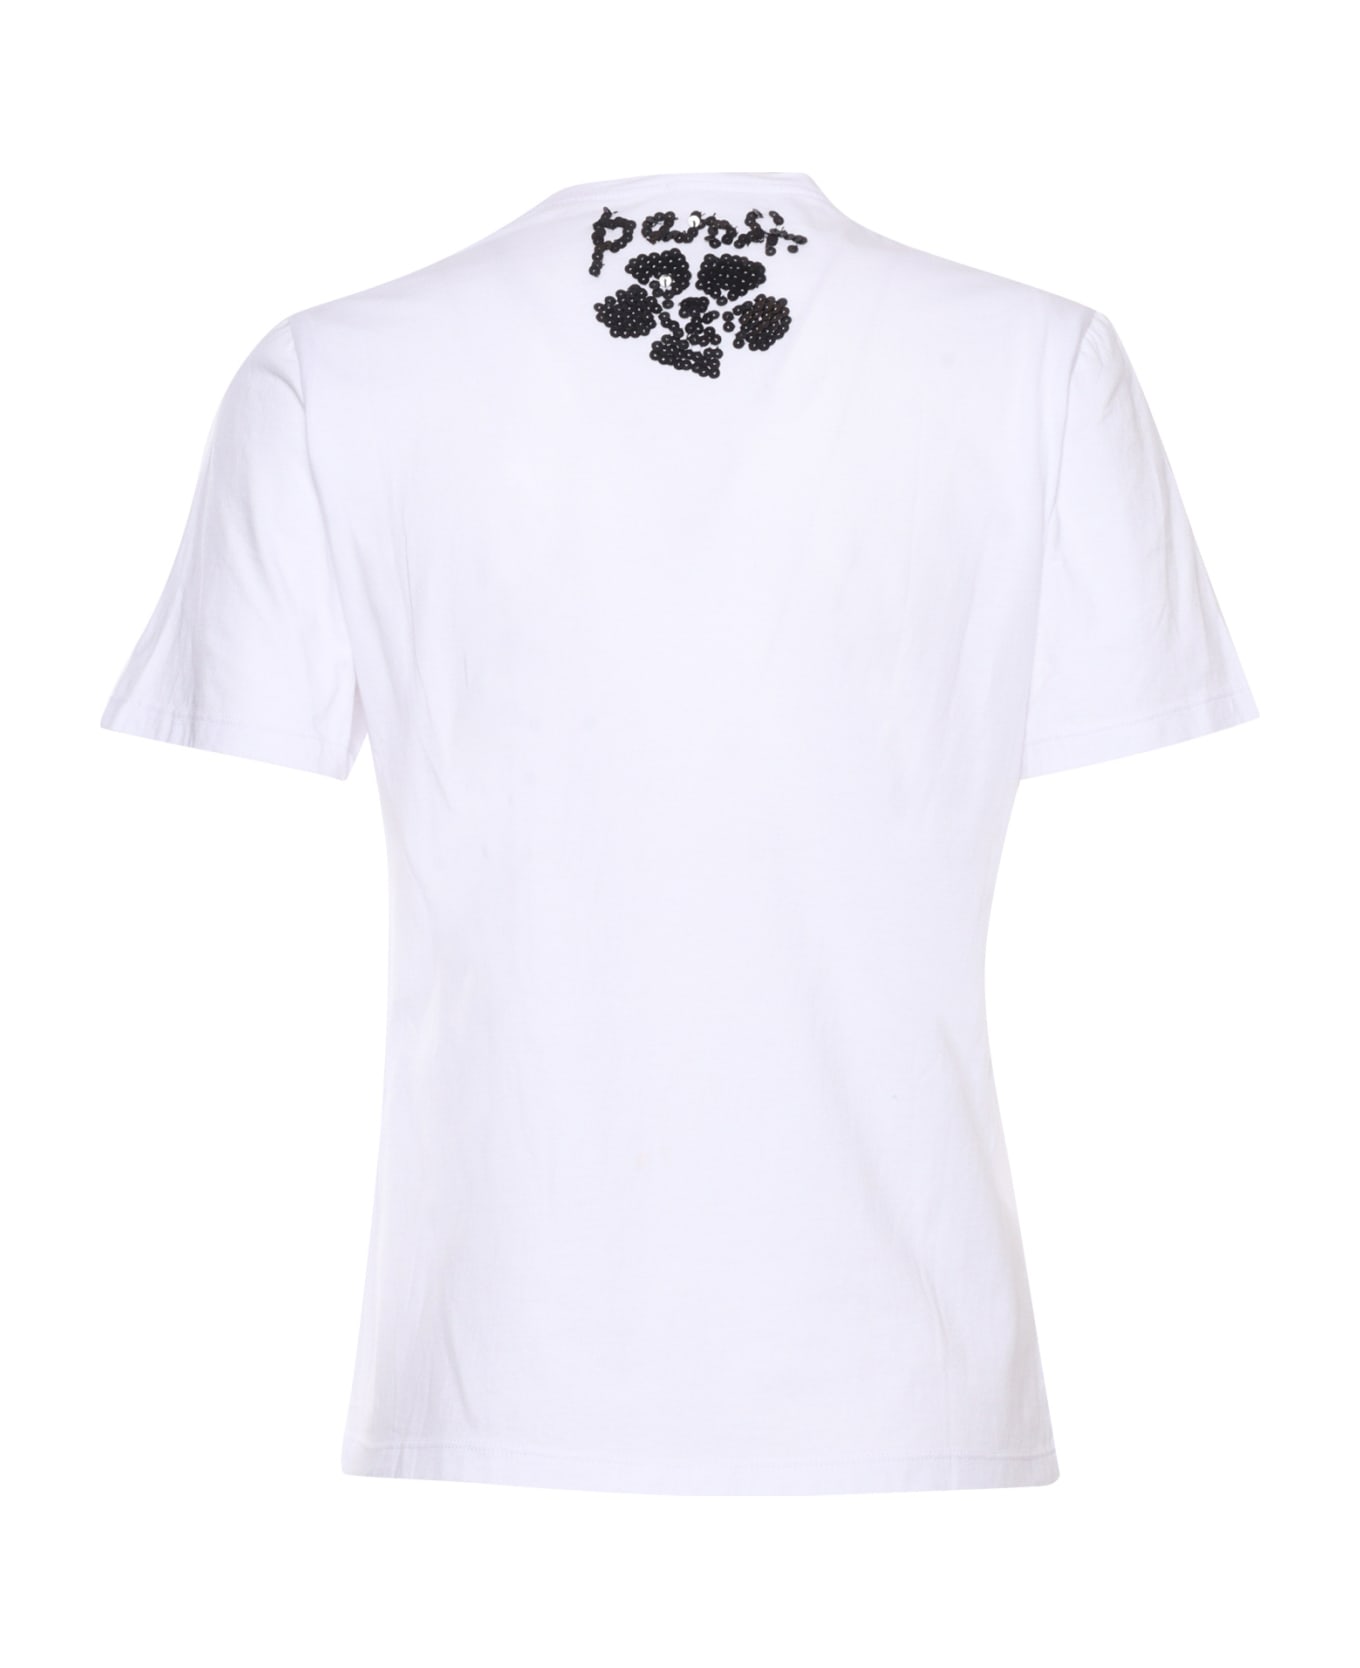 Parosh White T-shirt With Paillettes - WHITE Tシャツ